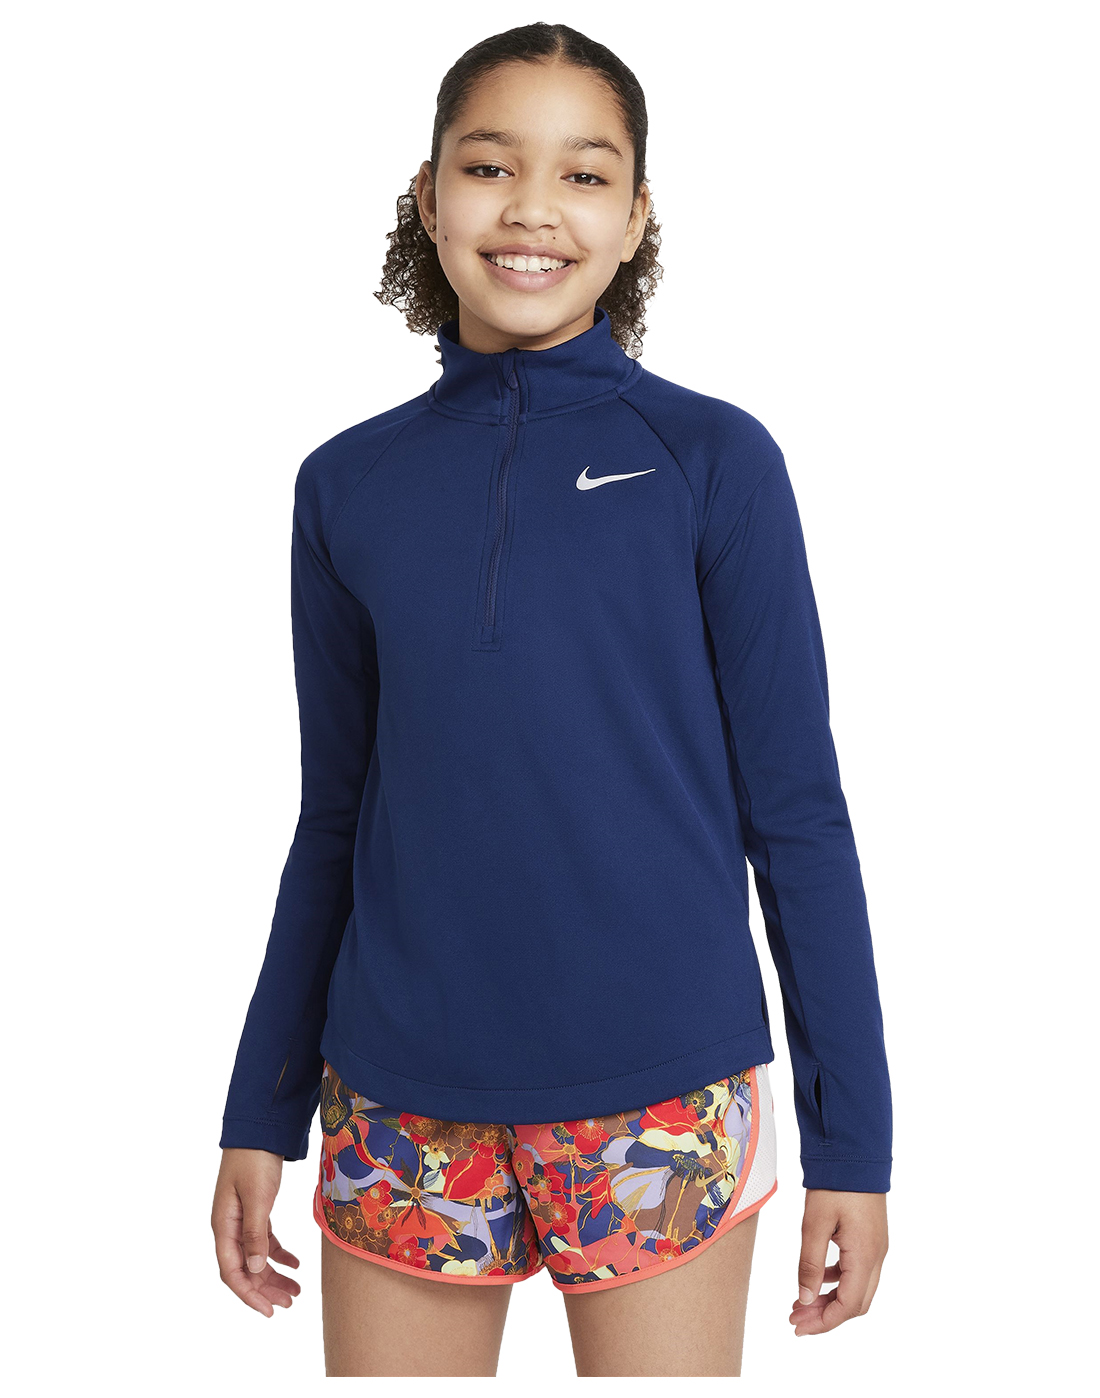 Nike Older Girls Run Half Zip Top - Blue | Life Style Sports UK